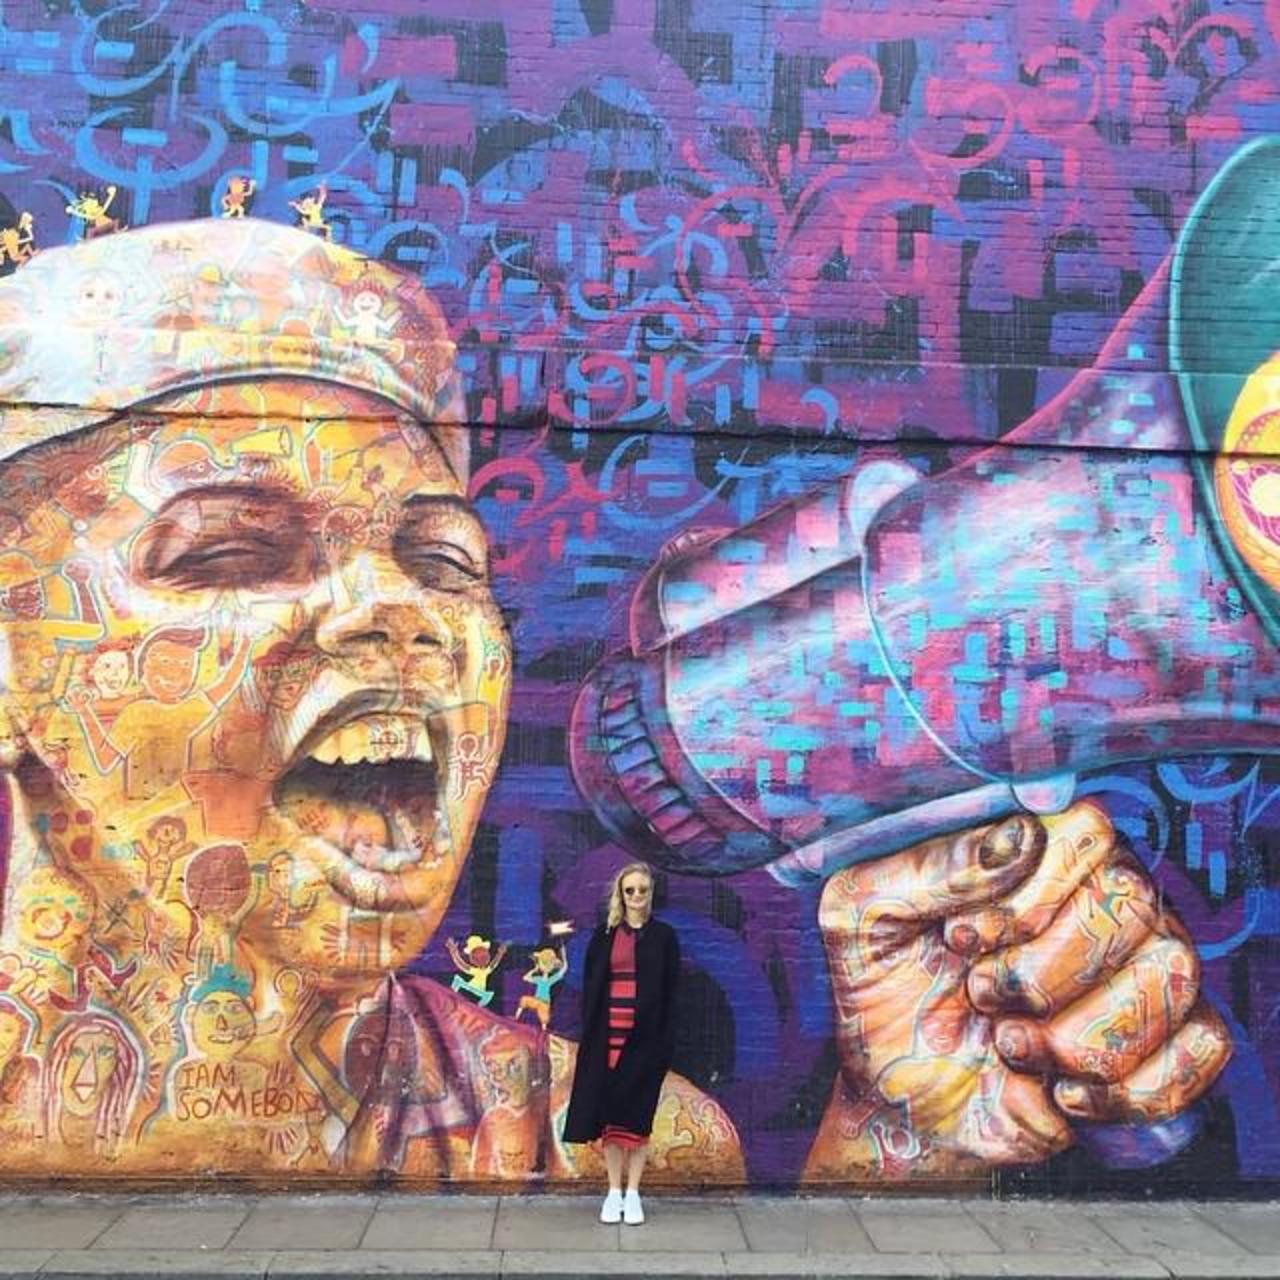 RT @StArtEverywhere: Stunning wall by @joelartista raising awareness for the rights of street youth worldwide #streetart #graffiti #joel… http://t.co/txlg8VQQTj